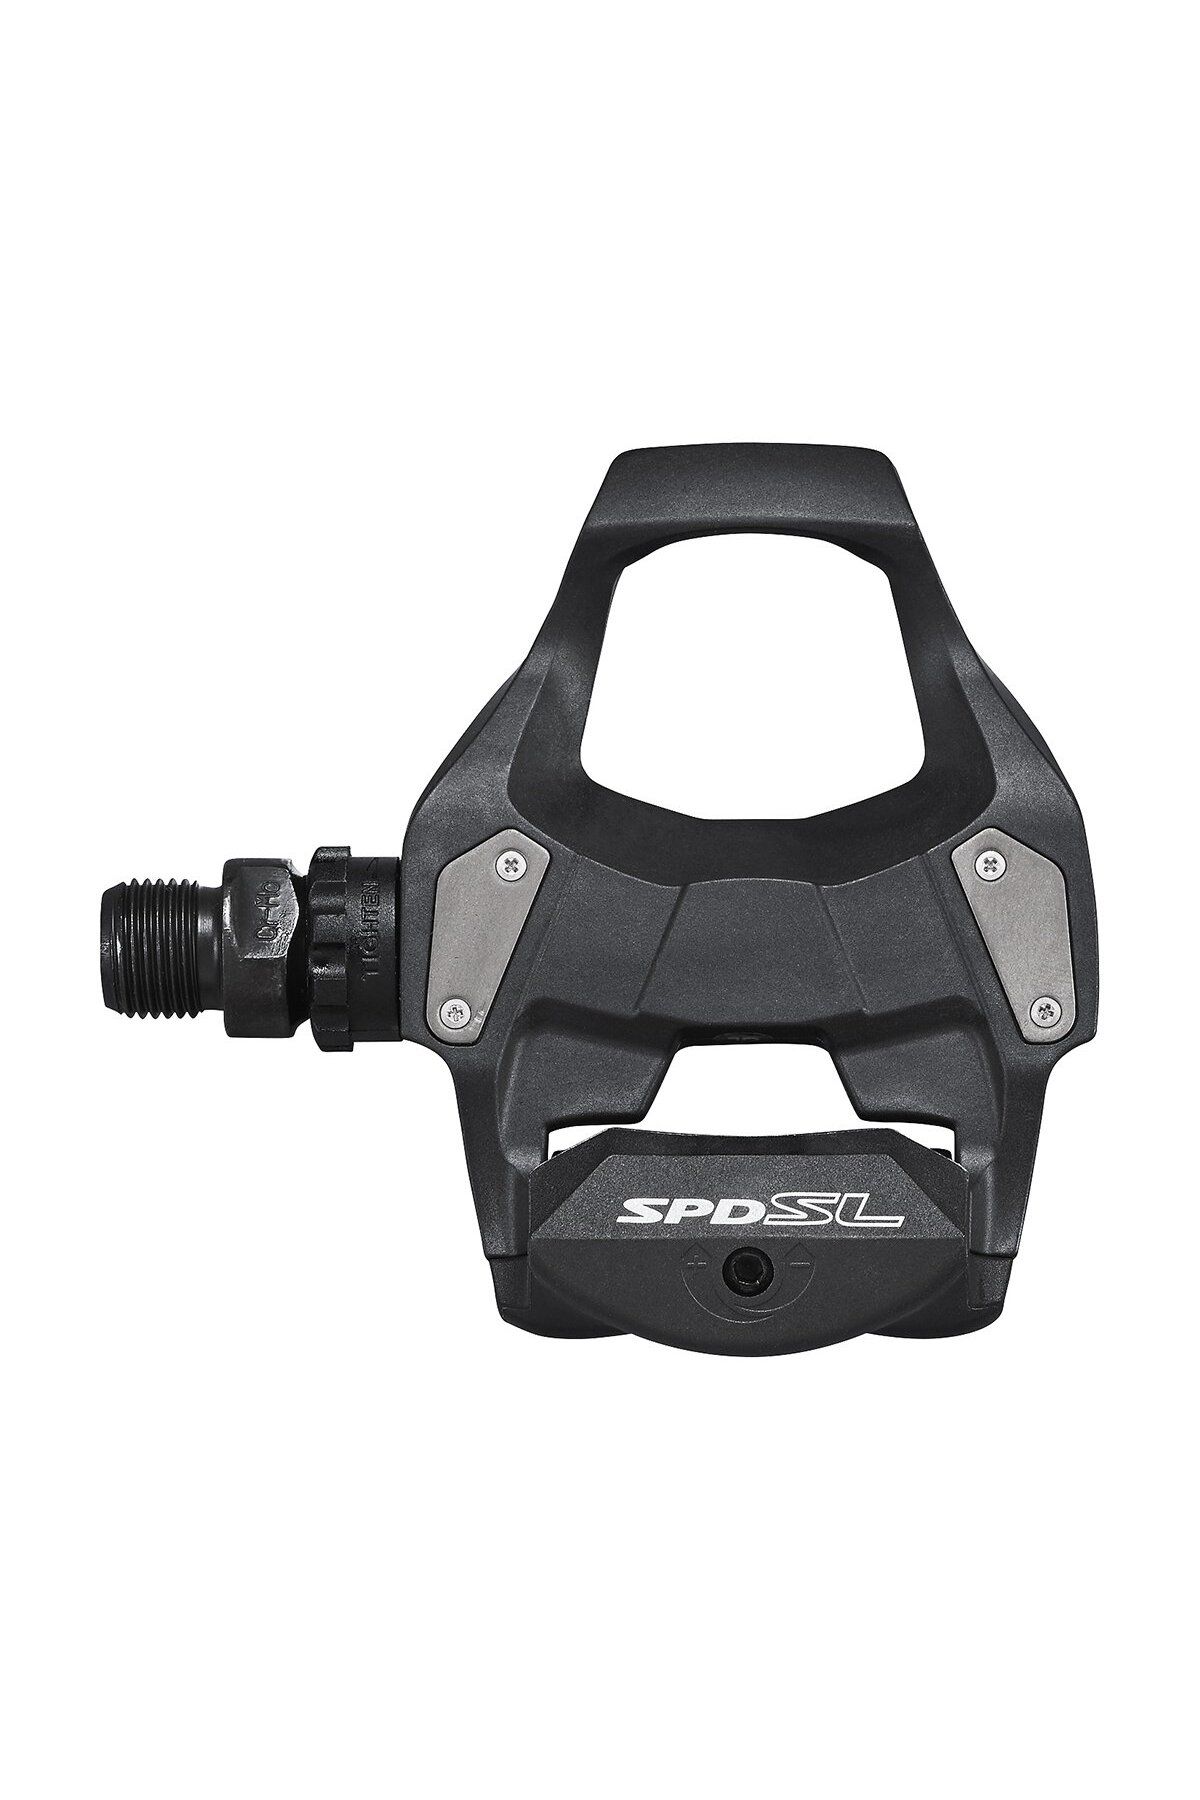 shimano Pedal SPD-SL PD-RS500 Kilit İle Birlikte Shimano